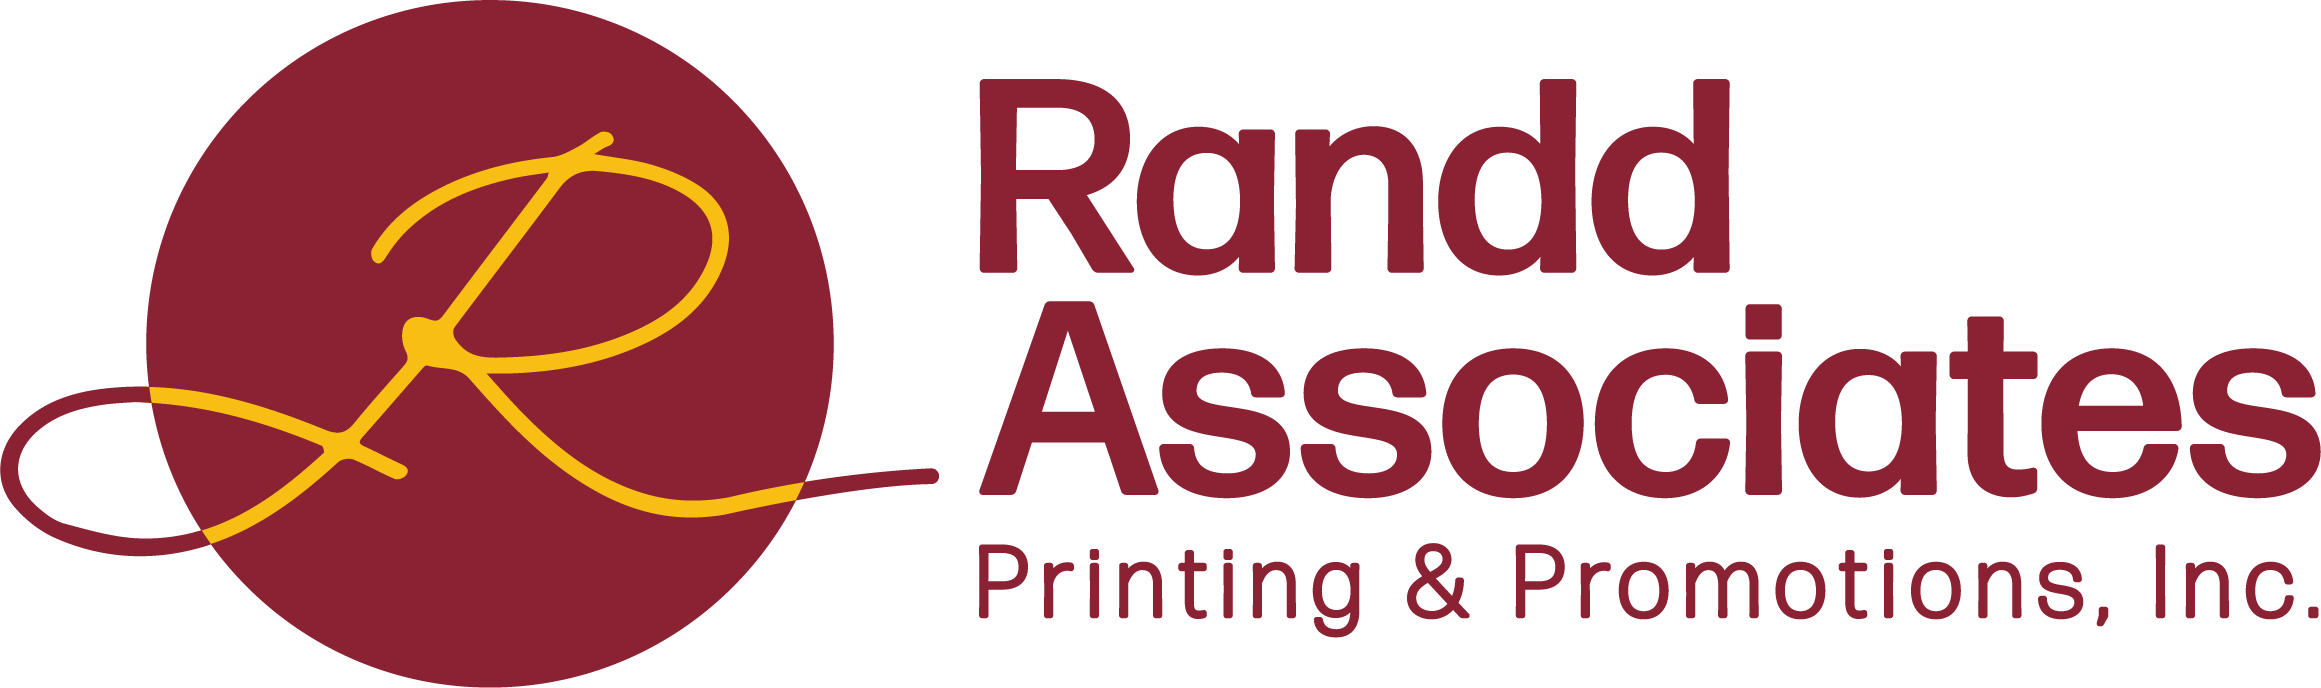 Randd Associates Printing & Promotions Inc.'s Logo